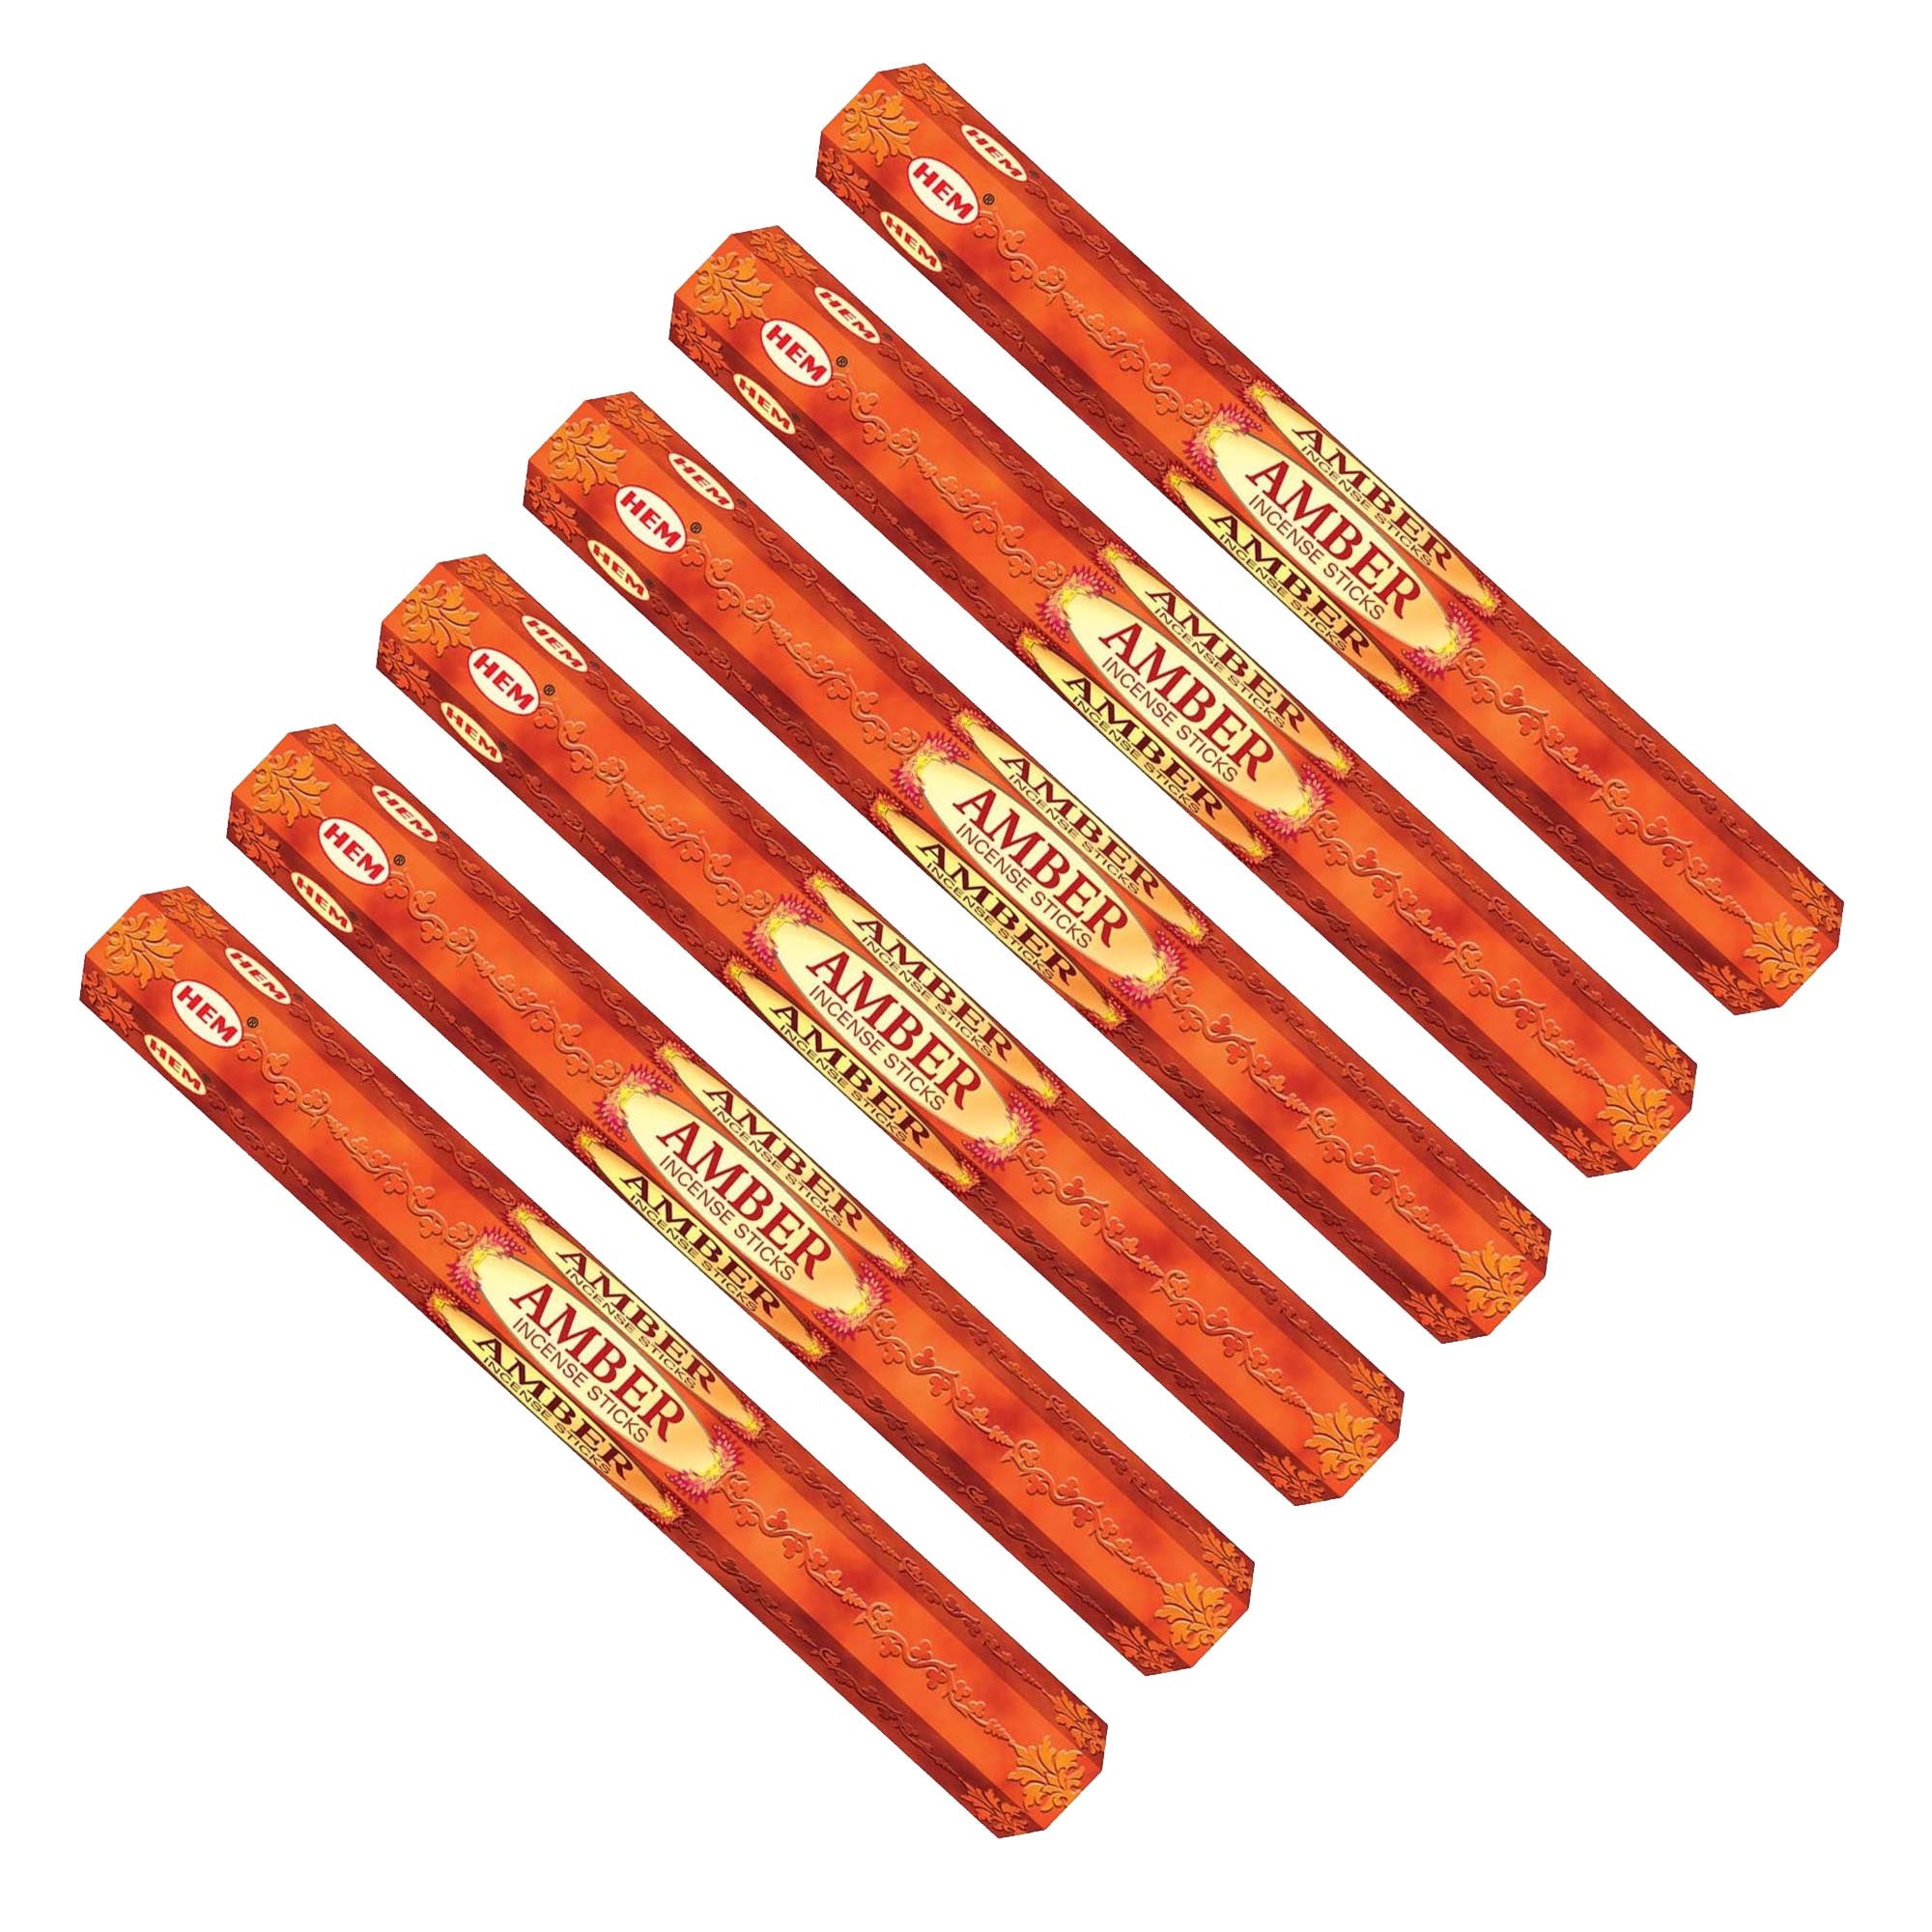 HEM - Hexagon - Amber Incense Sticks